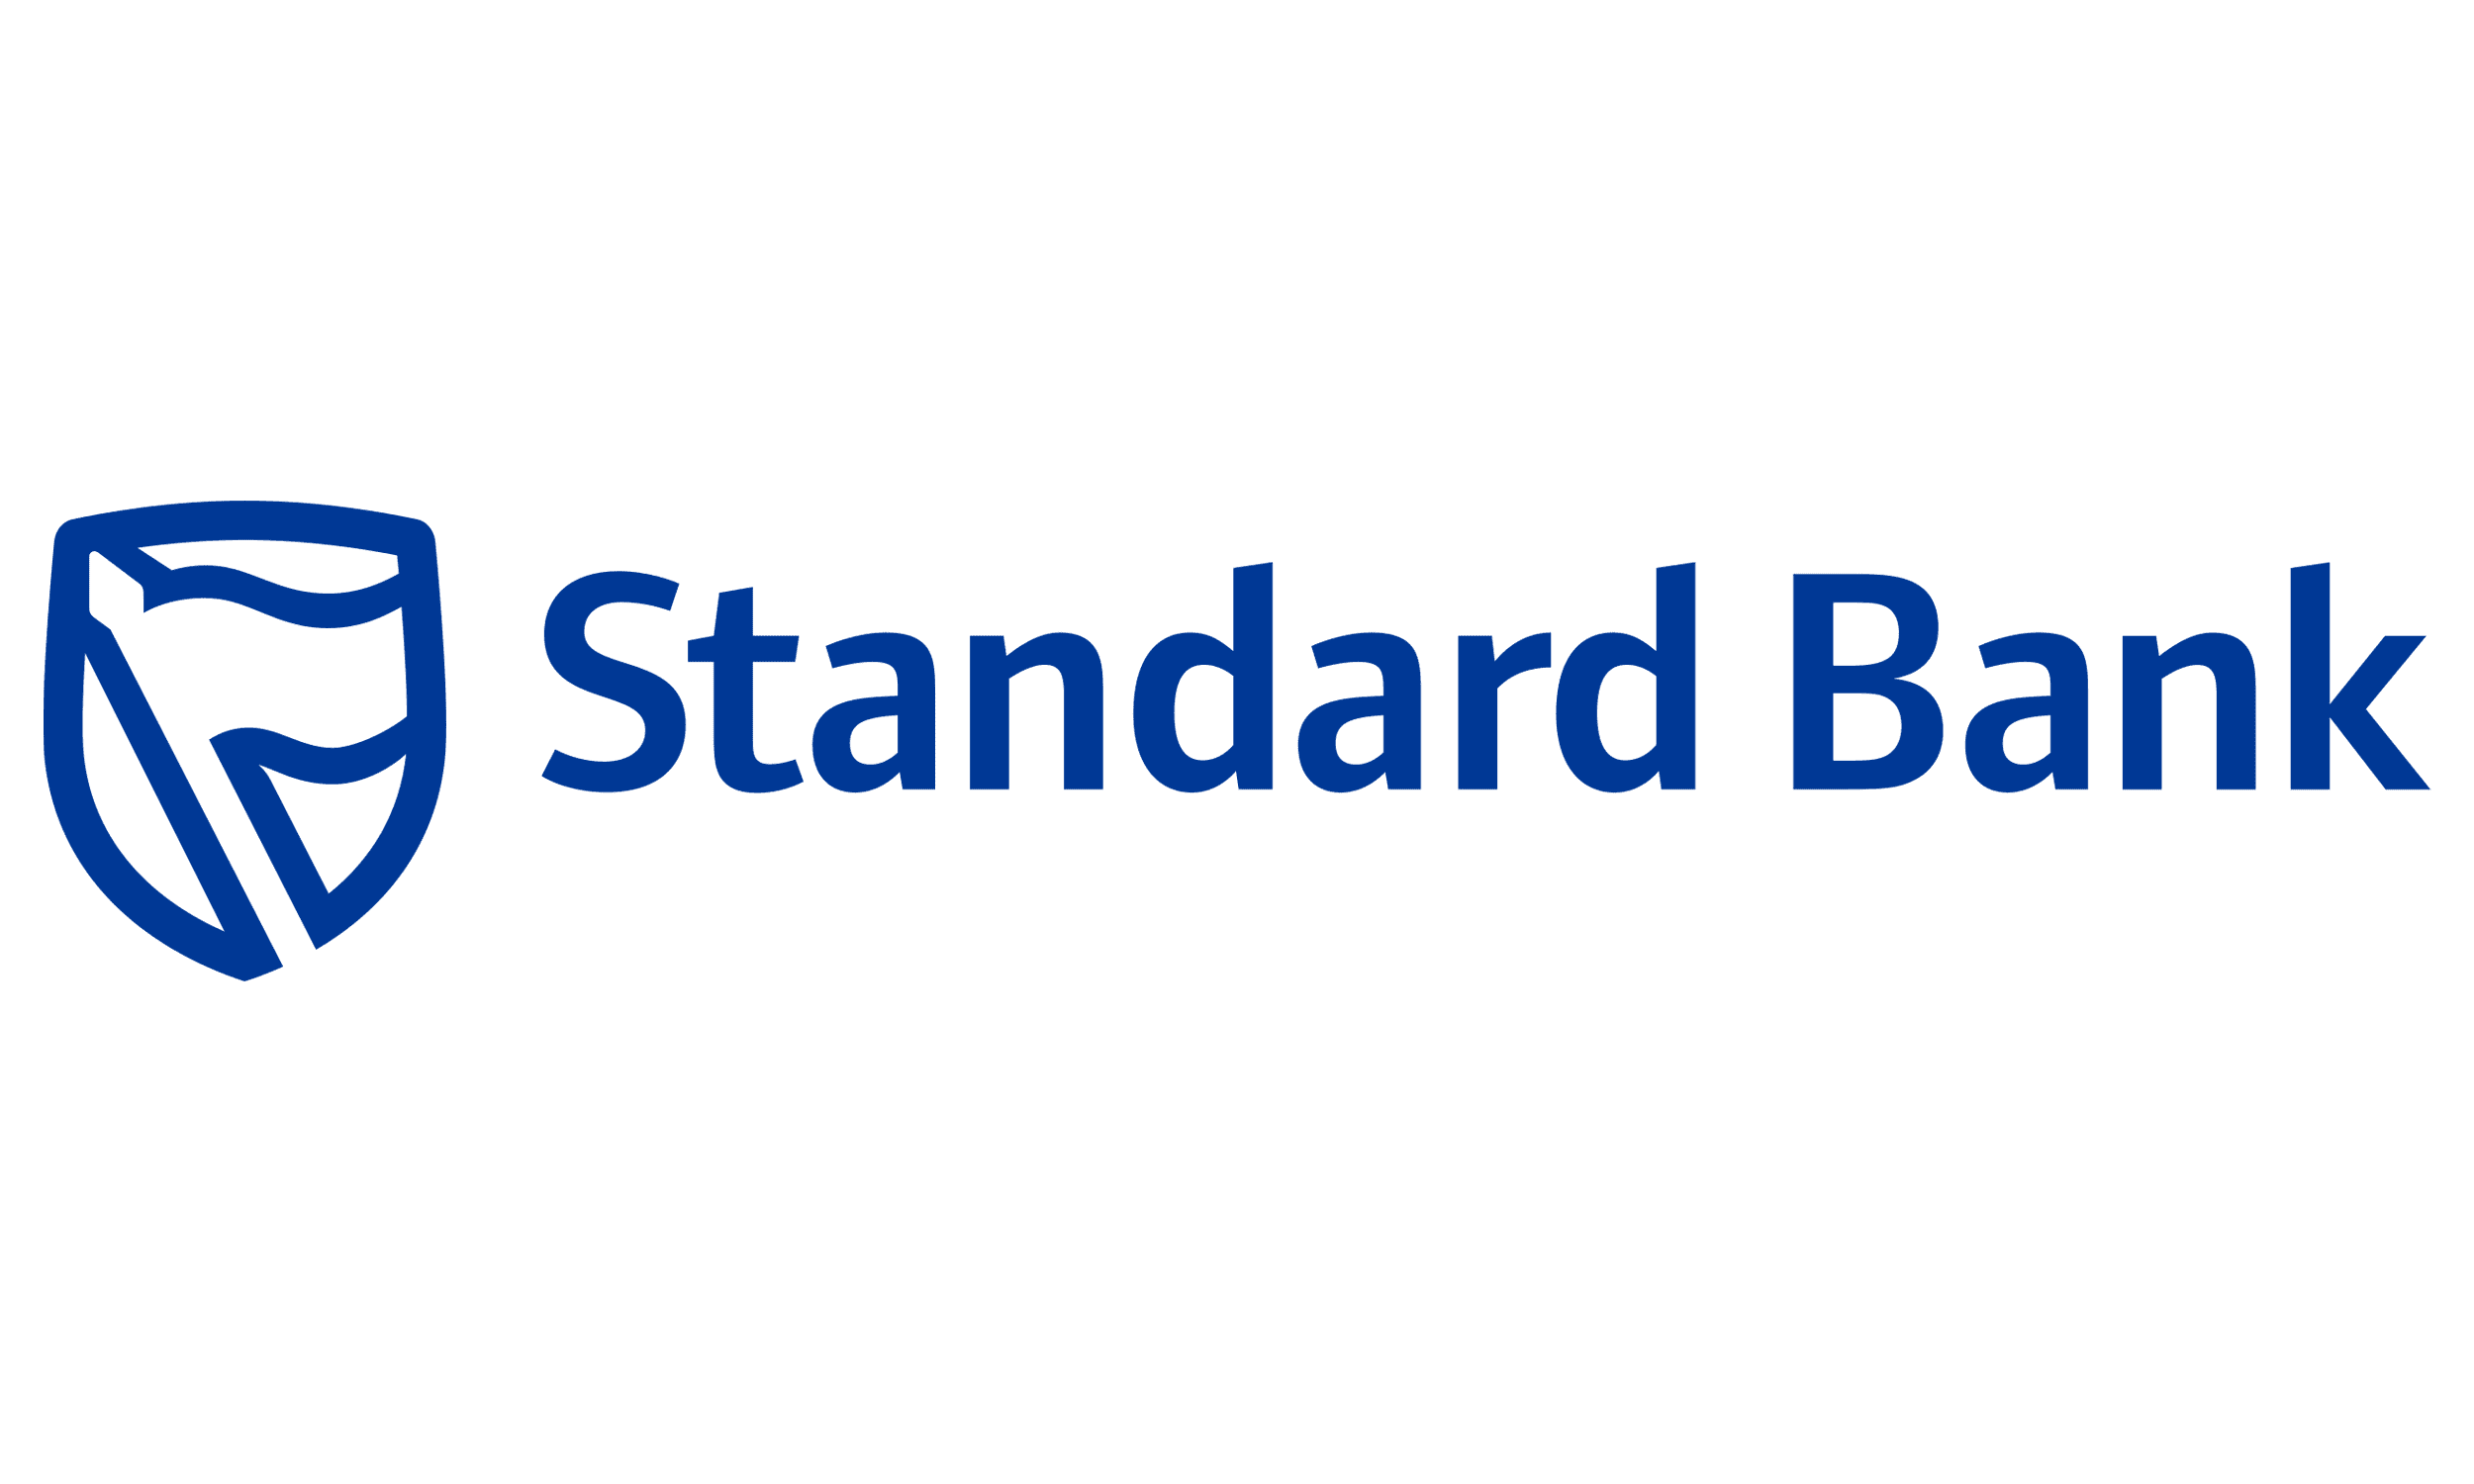 Standard Bank. Логотипы банков. Логотип британского банка. CIB Bank лого. Банки логотипы png